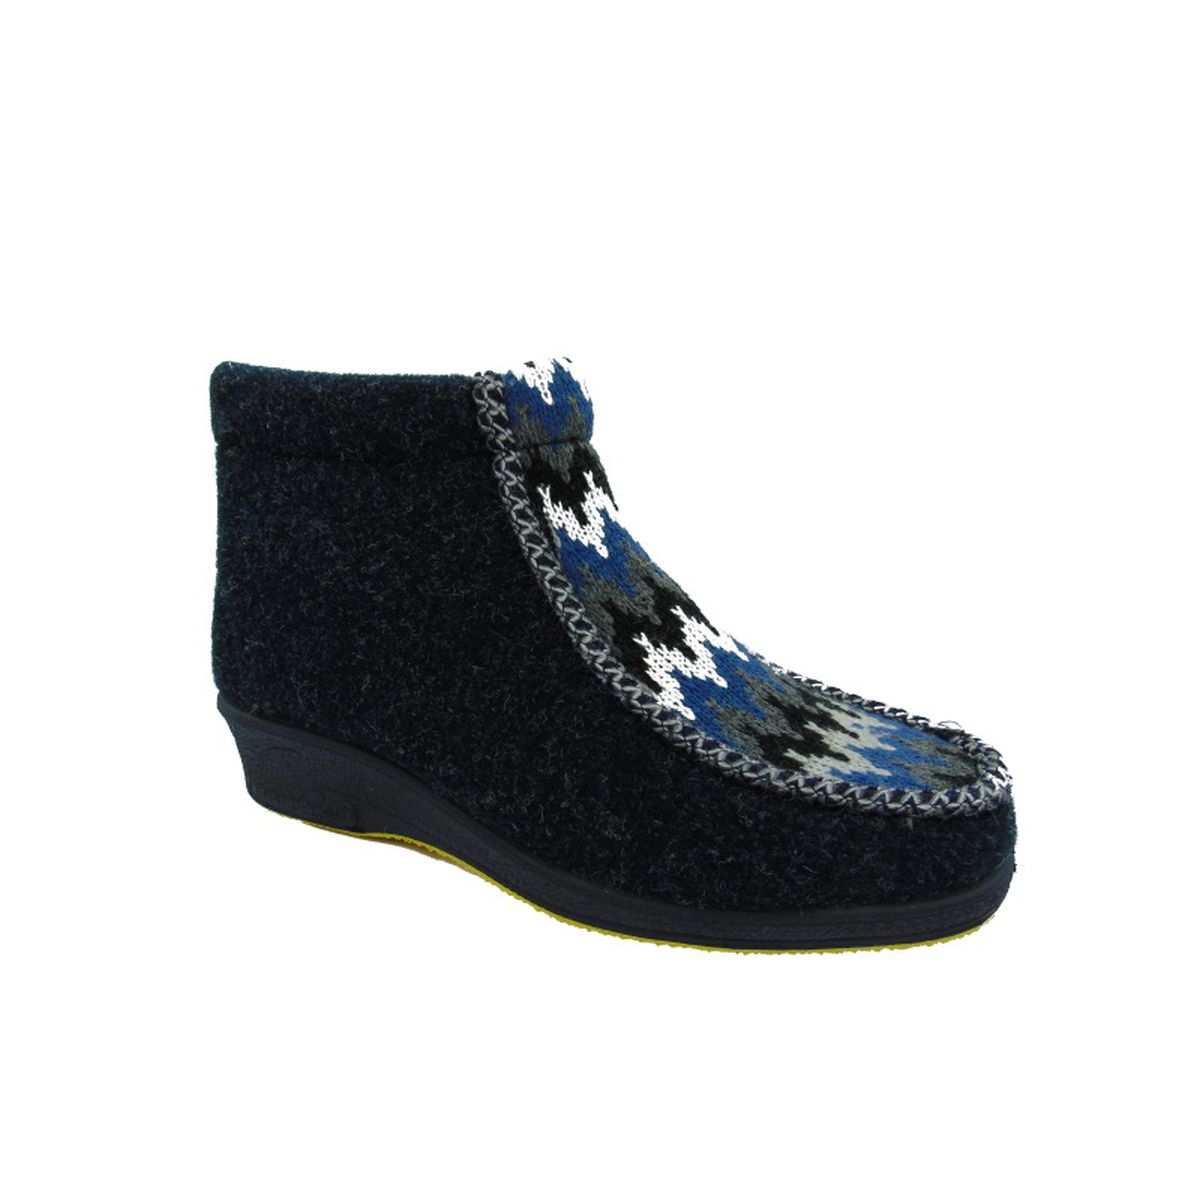 Pantofola Donna con zip, interno in lana Emanuela 507 Blu